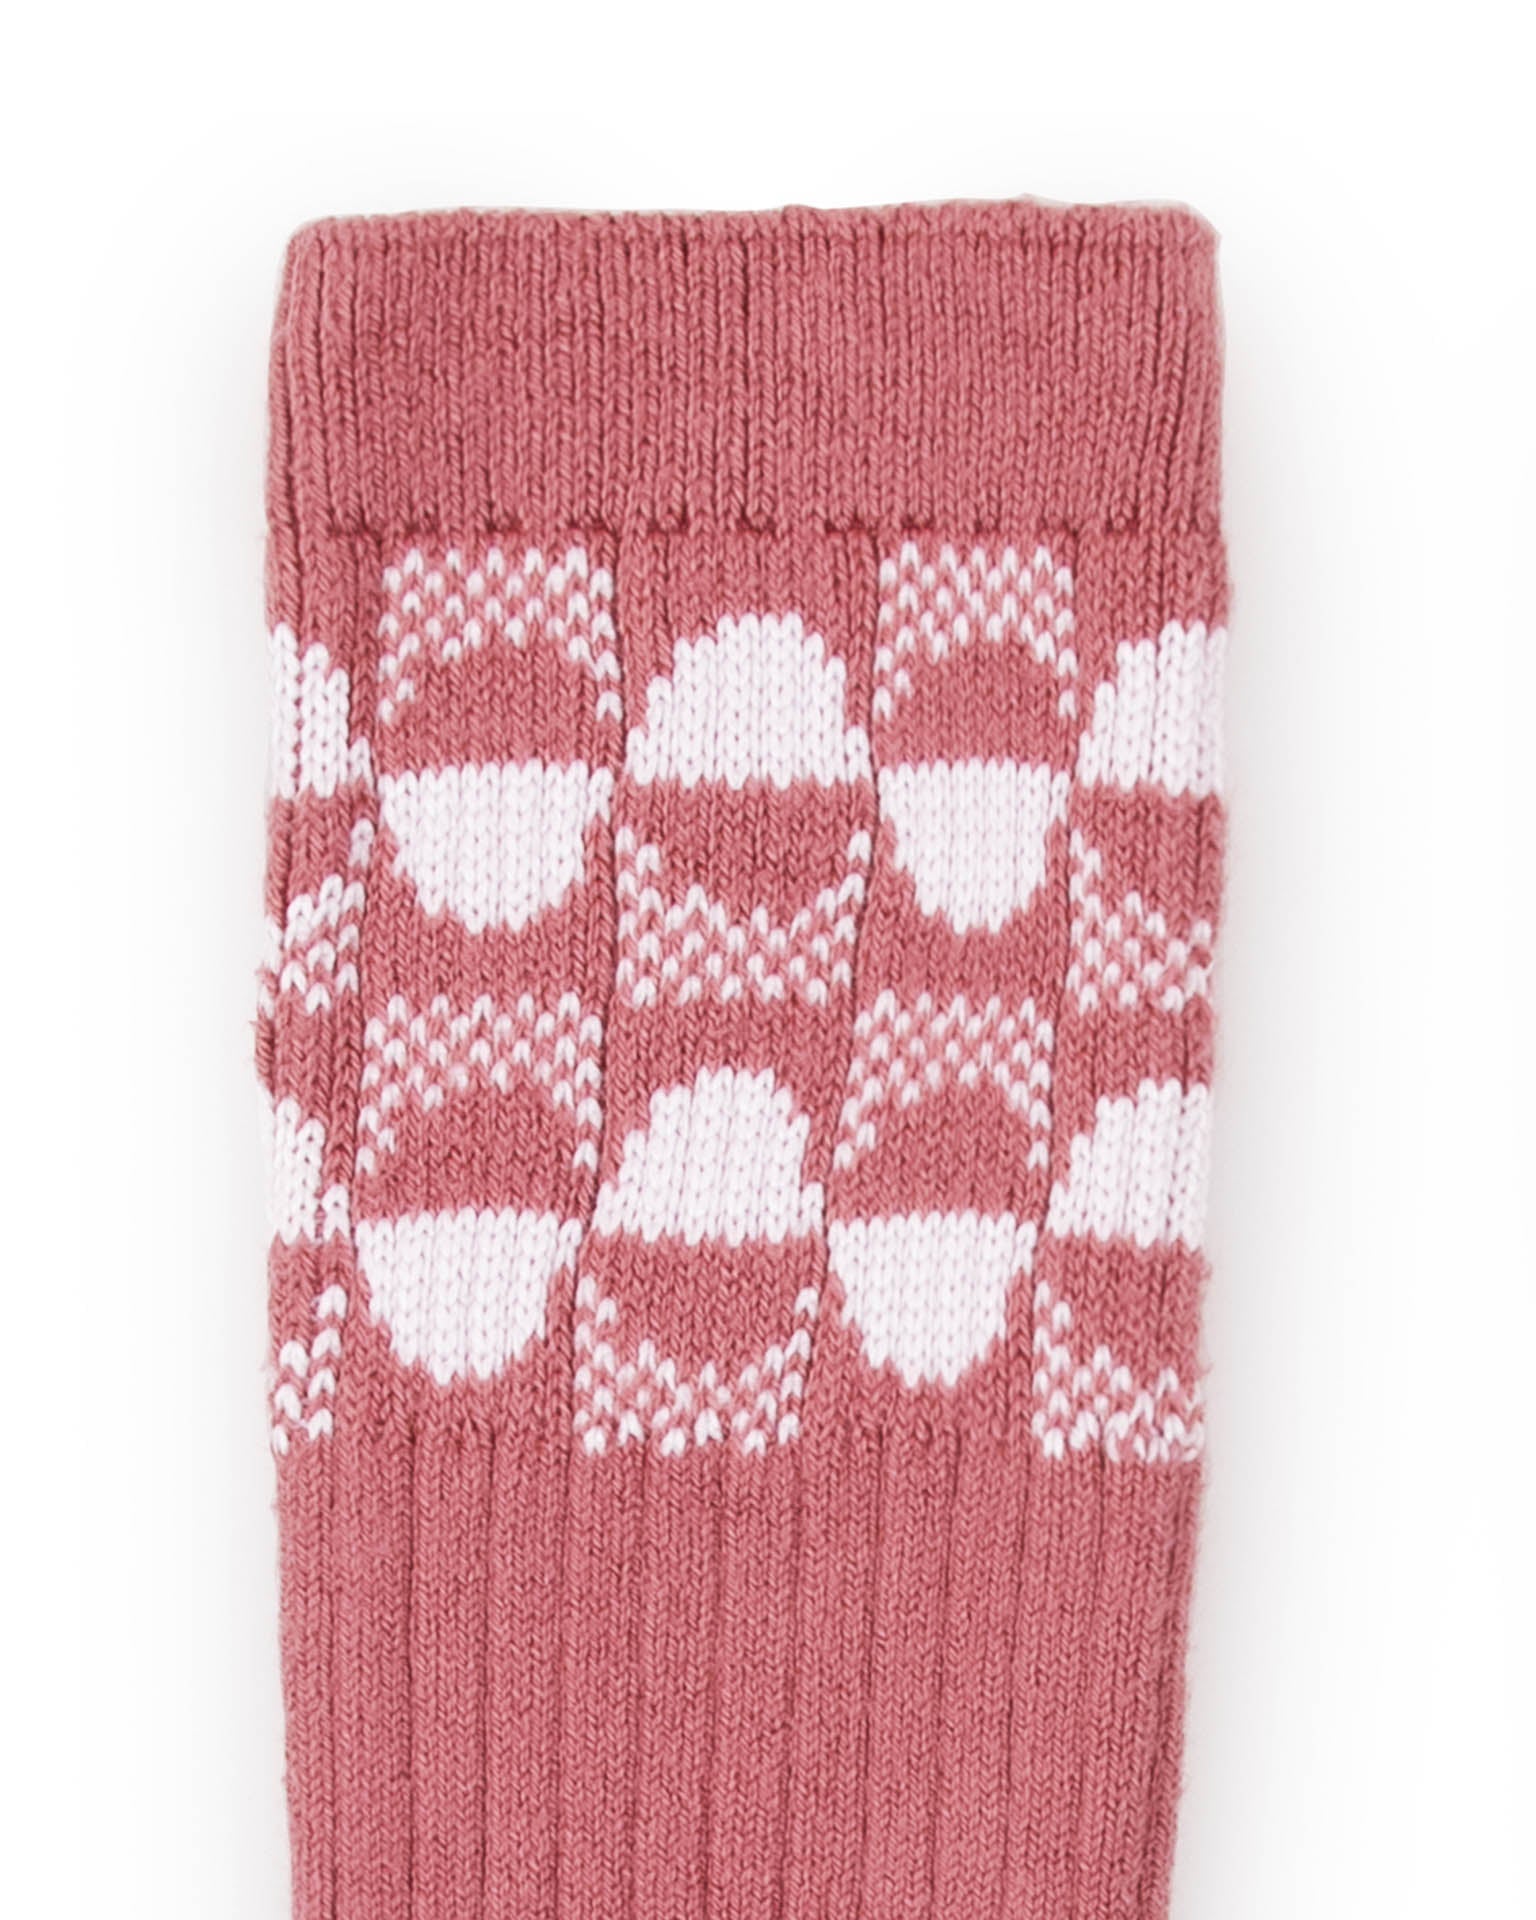 Little collégien accessories dominique knee socks in rose litchi